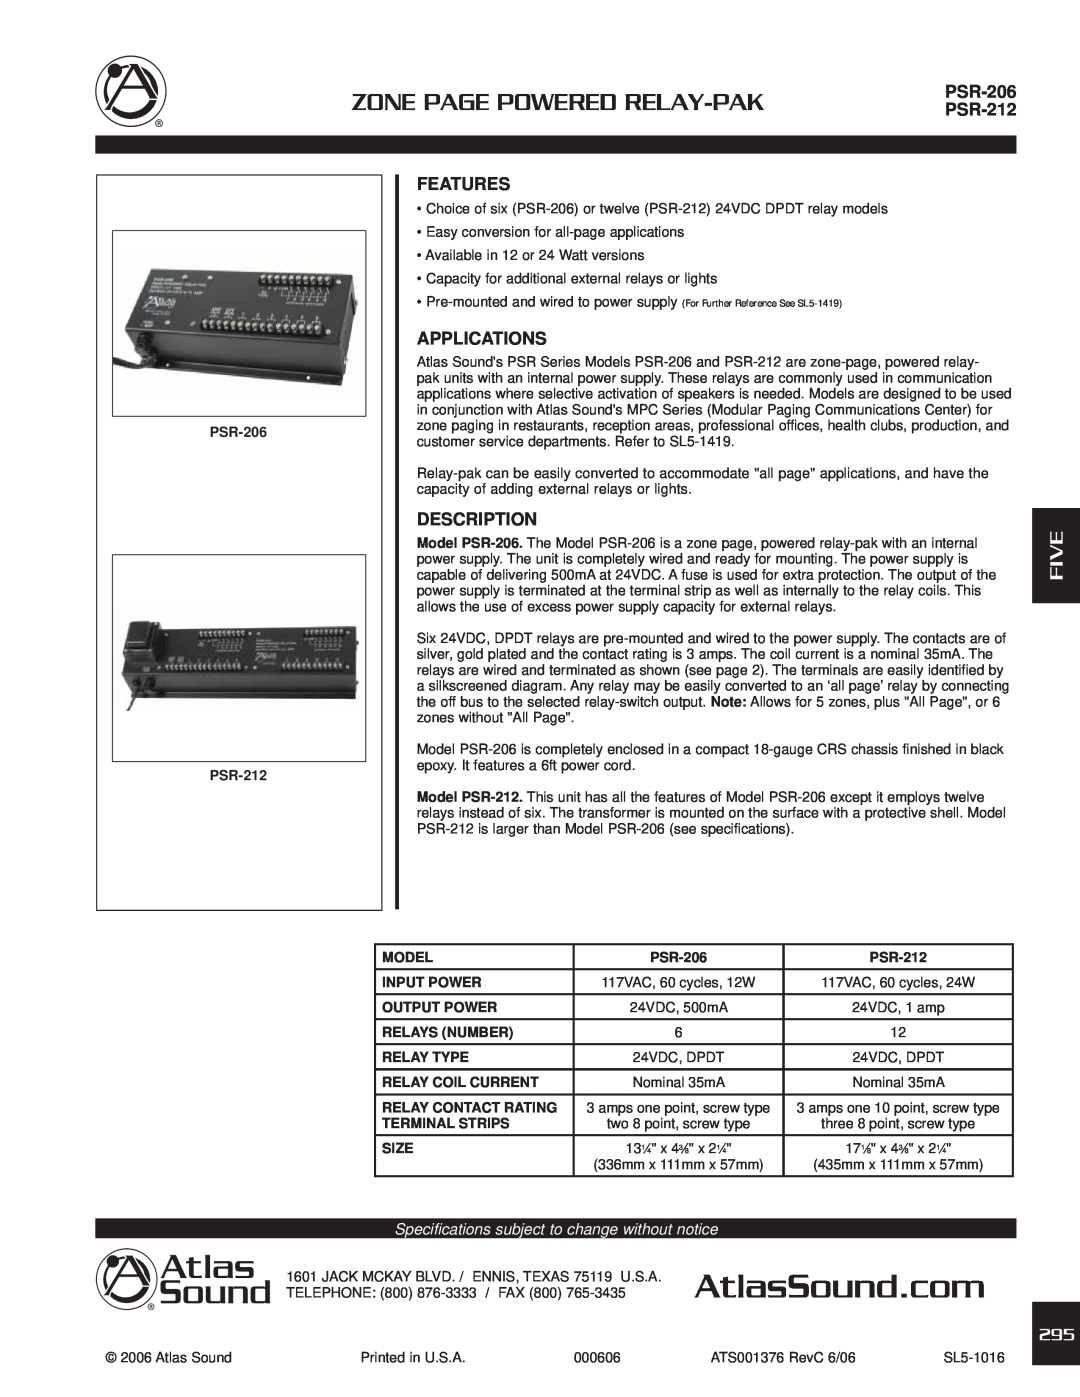 Atlas Sound PSR-206 specifications PSR-212, Features, Applications, Description, Zone Page Powered Relay-Pak, Five 